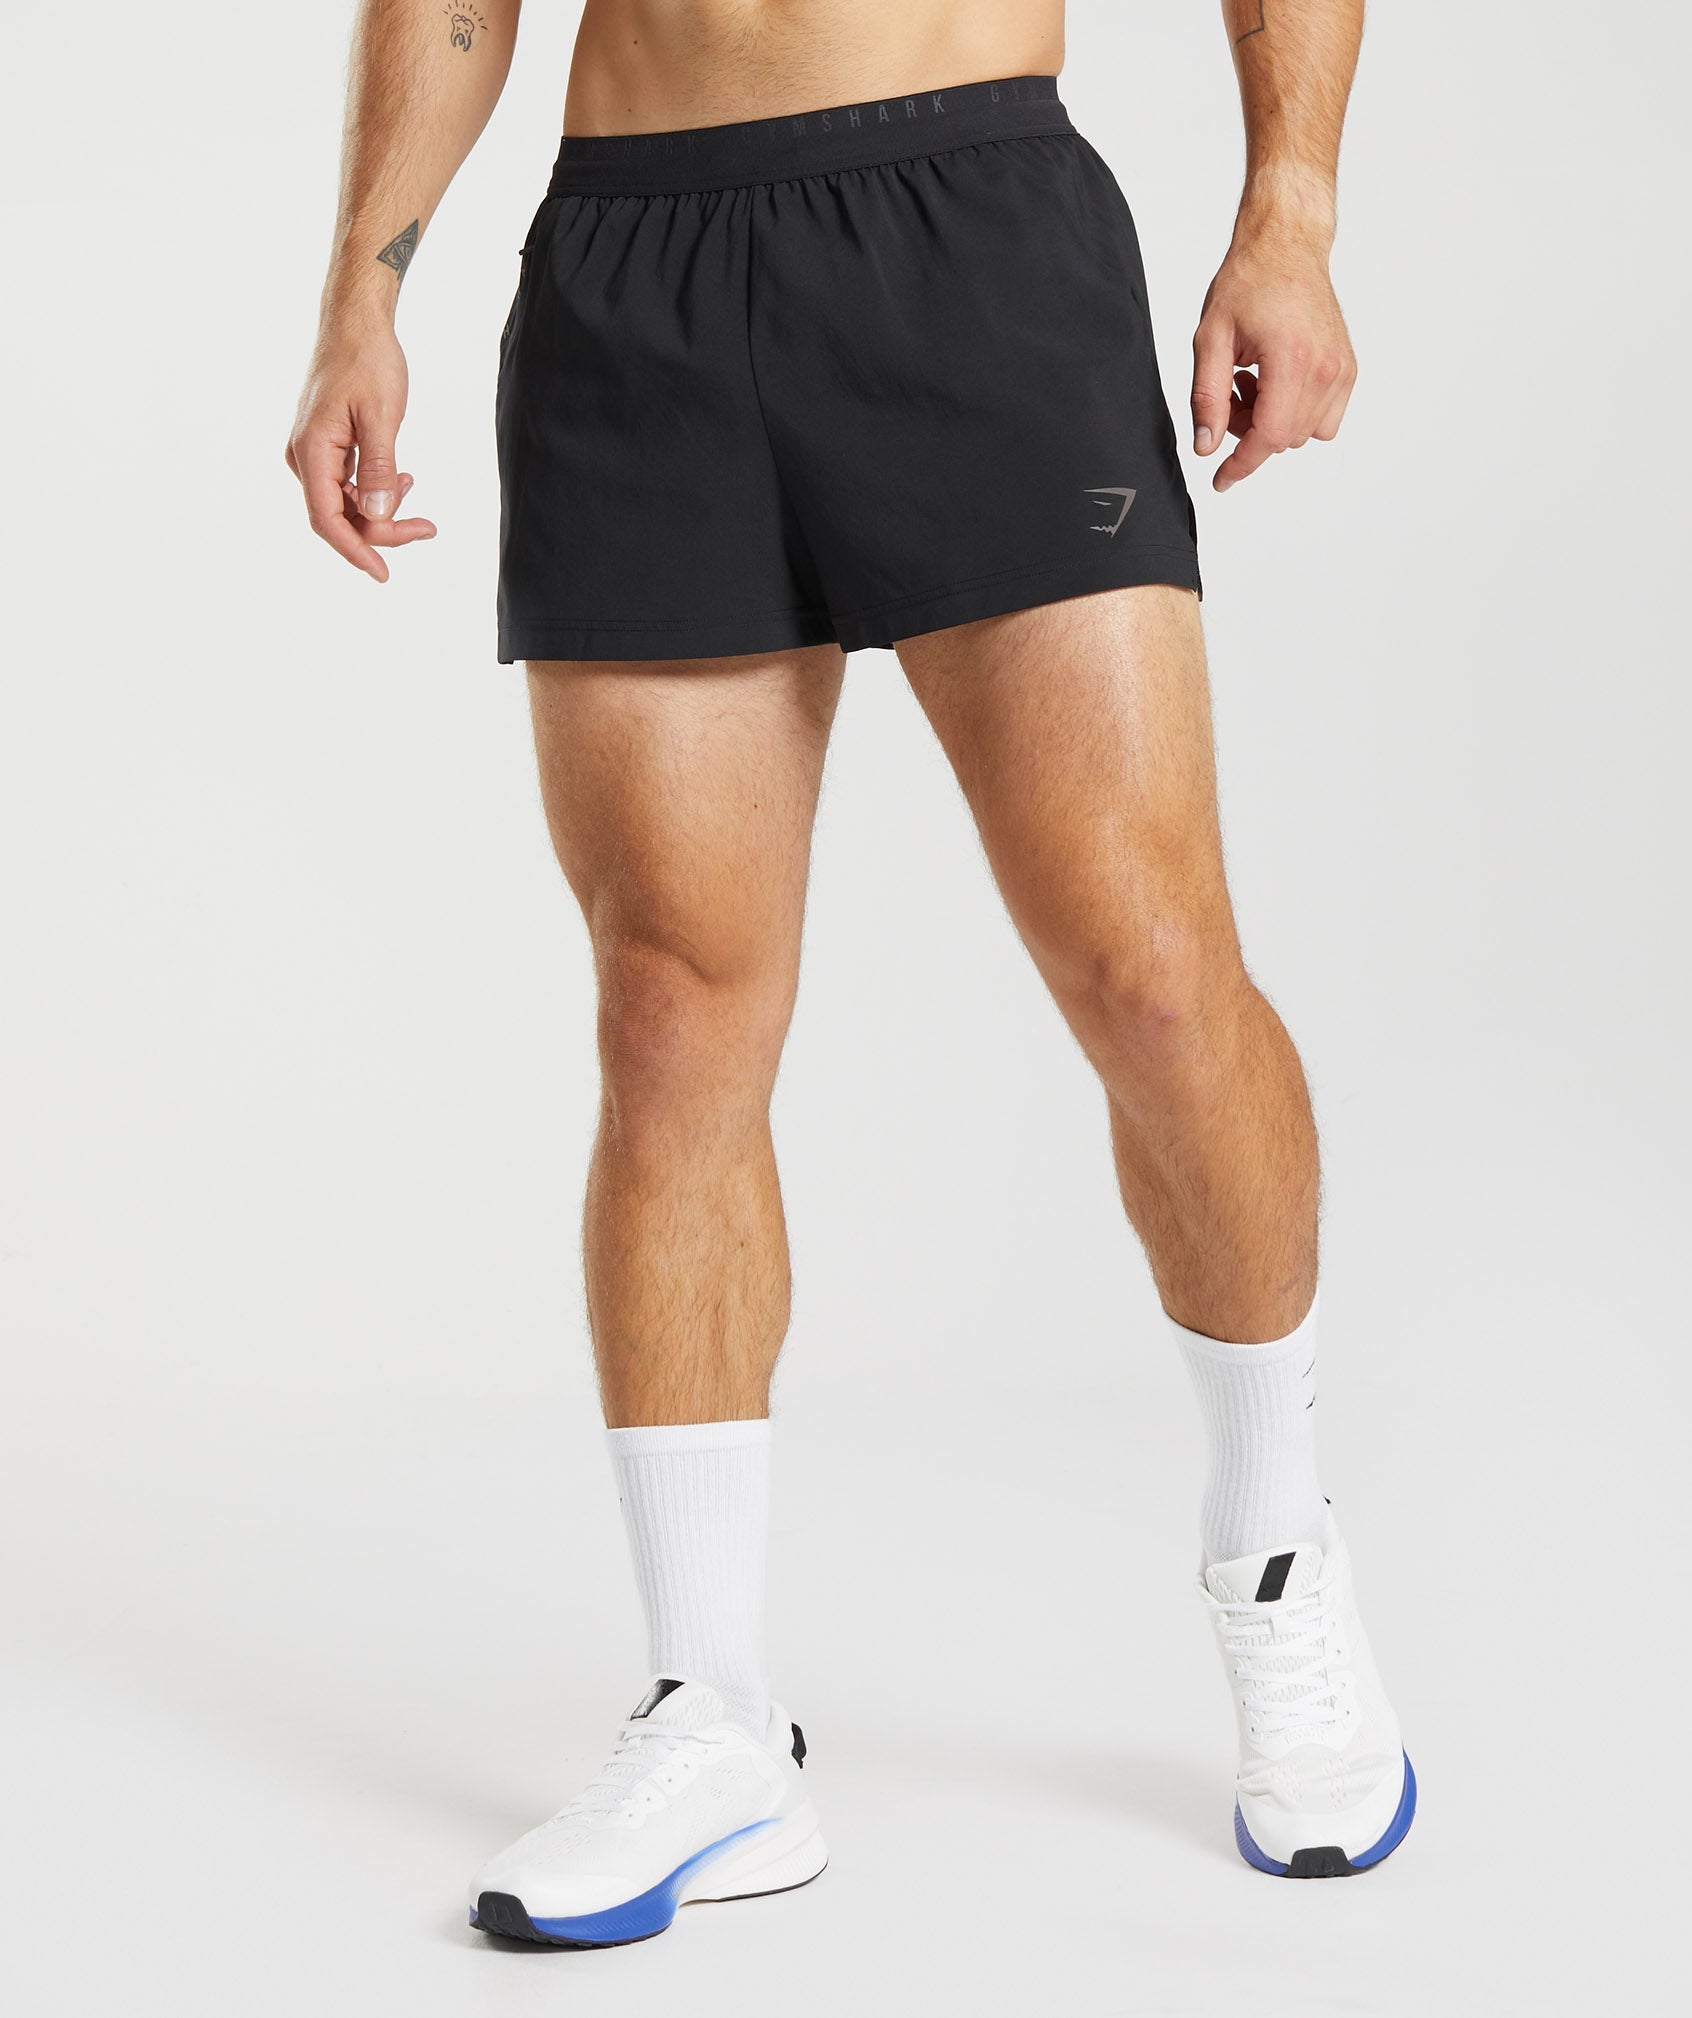  FLYFIREFLY Men's Gym Workout Shorts Running Lightweight  Athletic Short Pants Bodybuilding Training Black : Clothing, Shoes & Jewelry